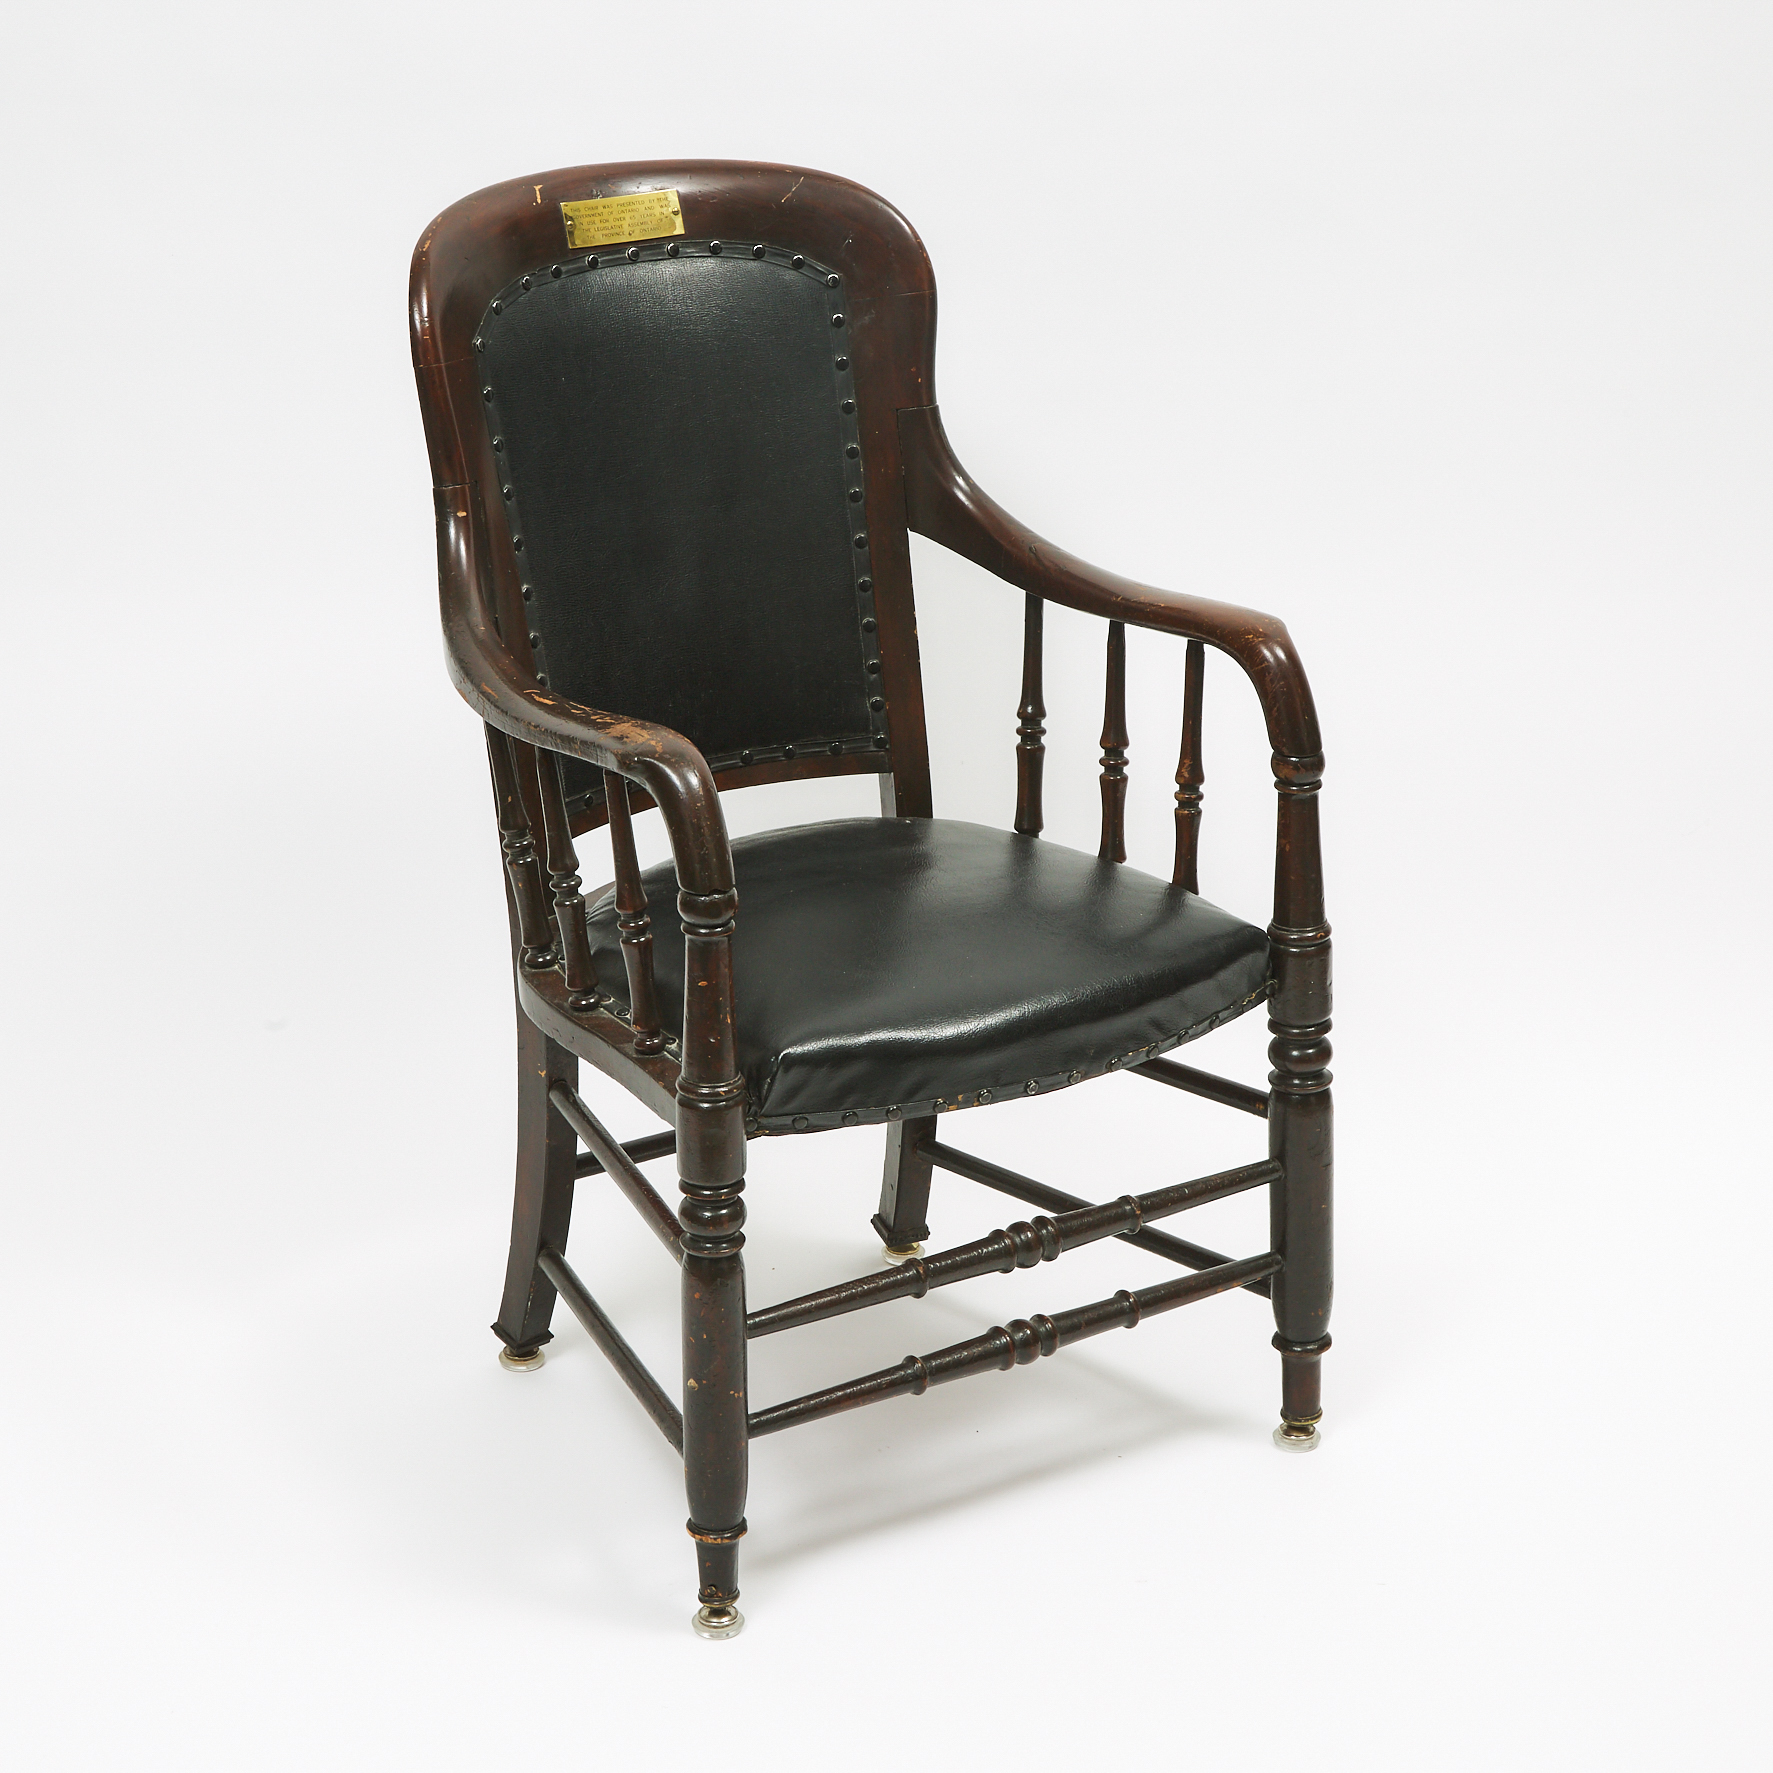 Legislative Assembly of Ontario (Queen's Park) Parliamentarian's Chair, 19th century